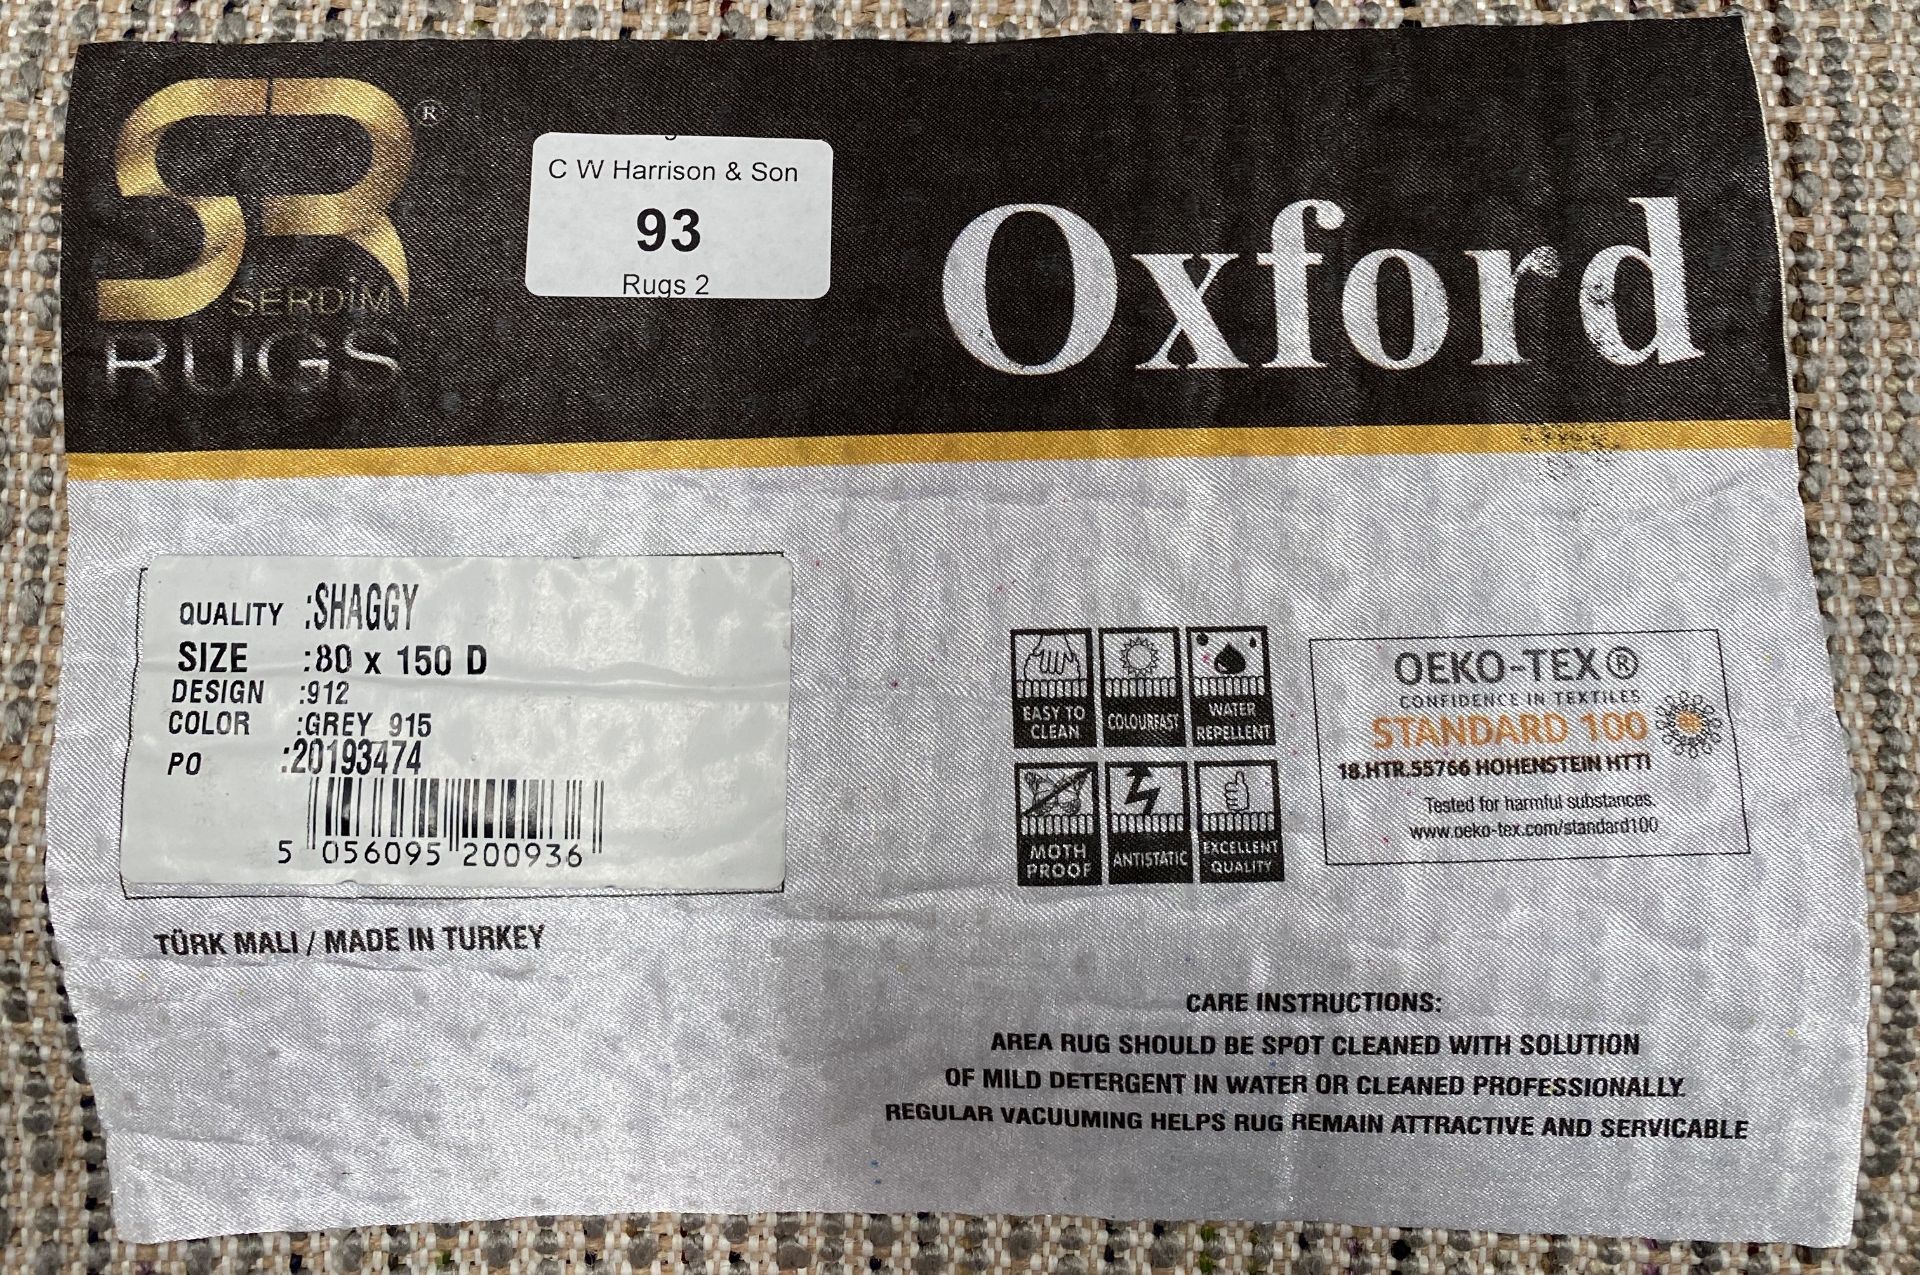 Aserdim Rugs Oxford shaggy 912 grey rug - Image 2 of 2